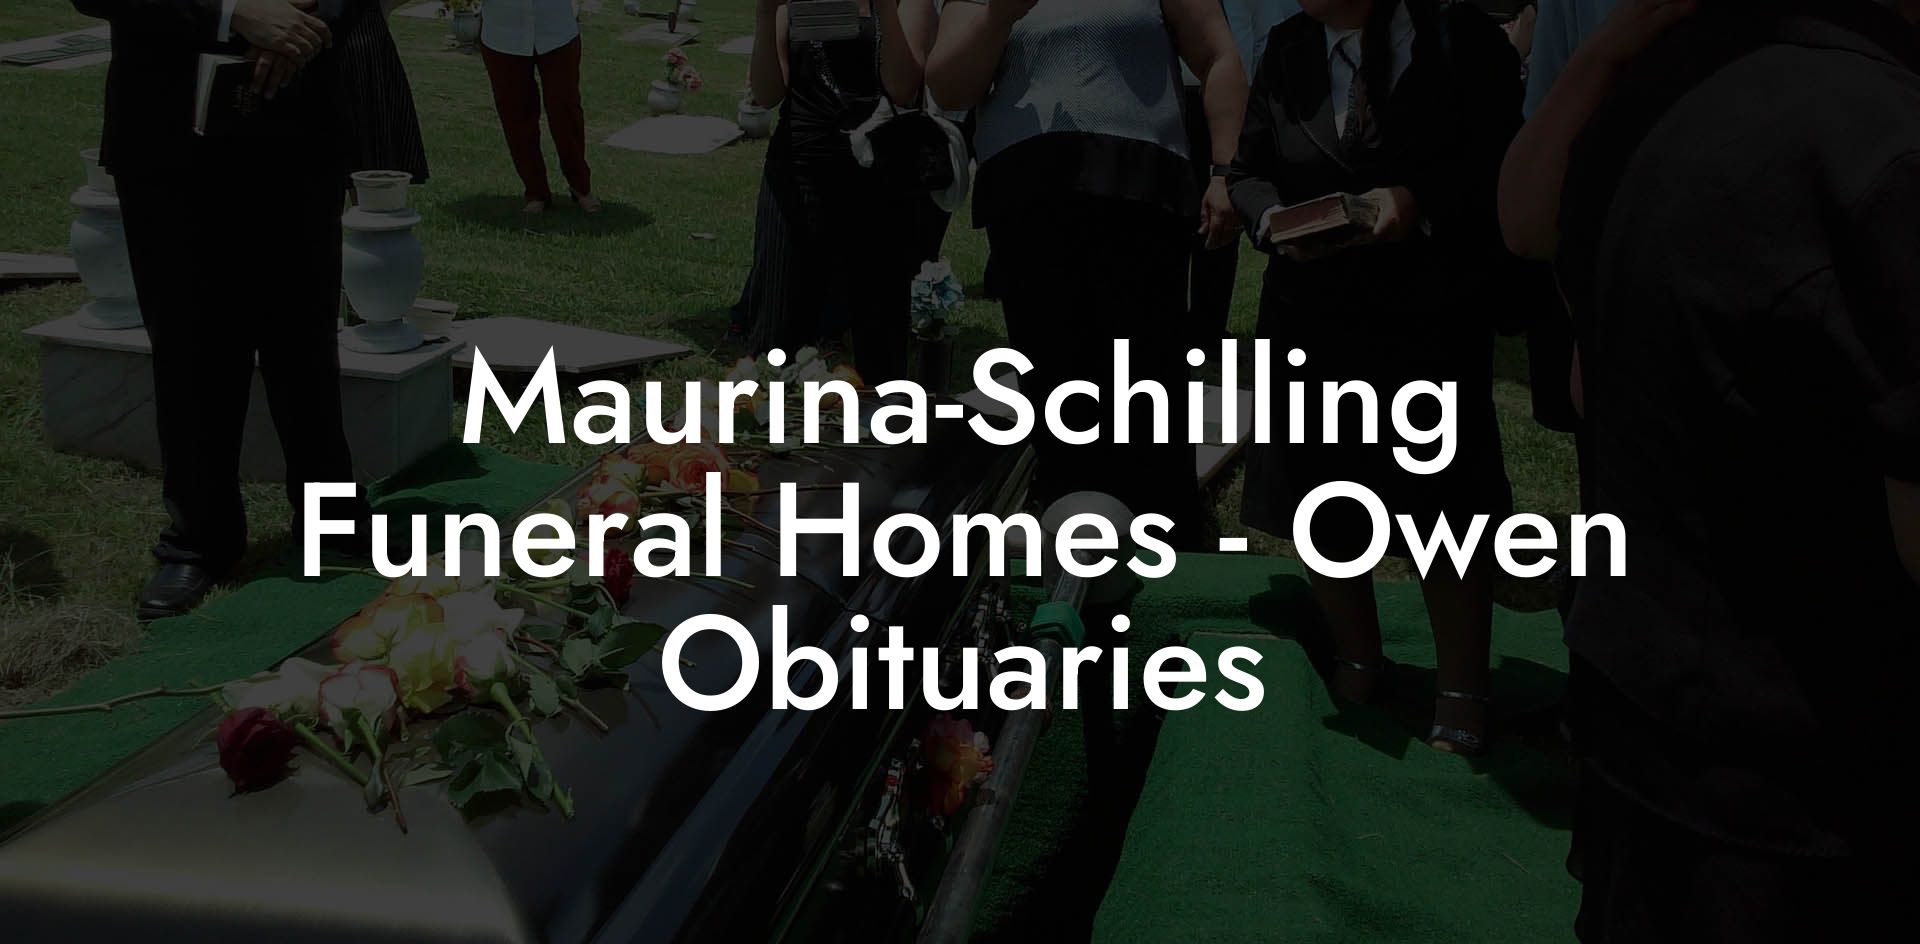 Maurina-Schilling Funeral Homes - Owen Obituaries